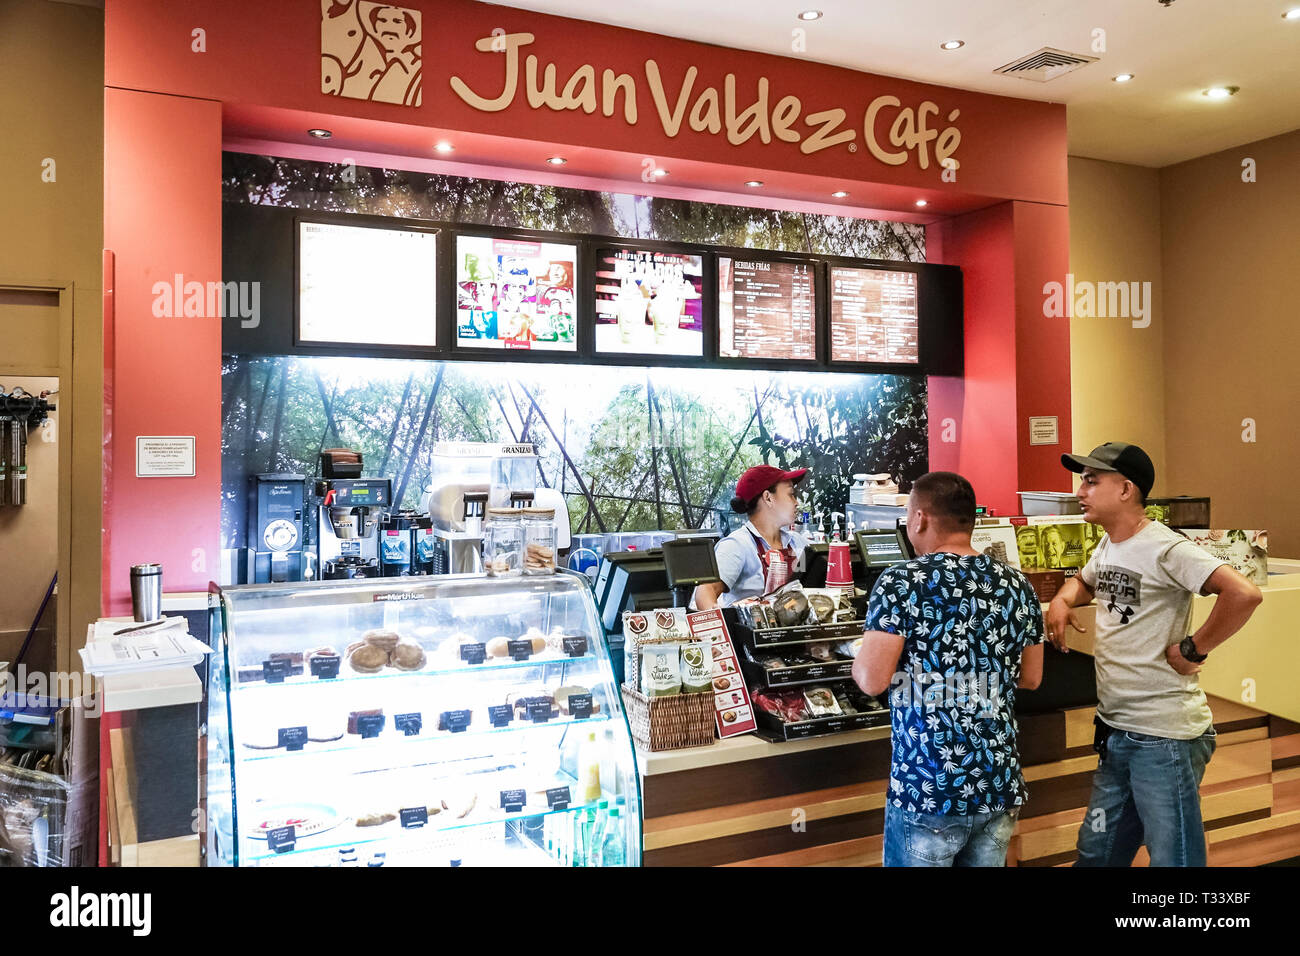 Cartagena Colombia, Bocagrande, Centro Comercial Nao plaza, Café Juan Valdez, hispanische Einwohner, Mann, Männer, Frau fe Stockfoto